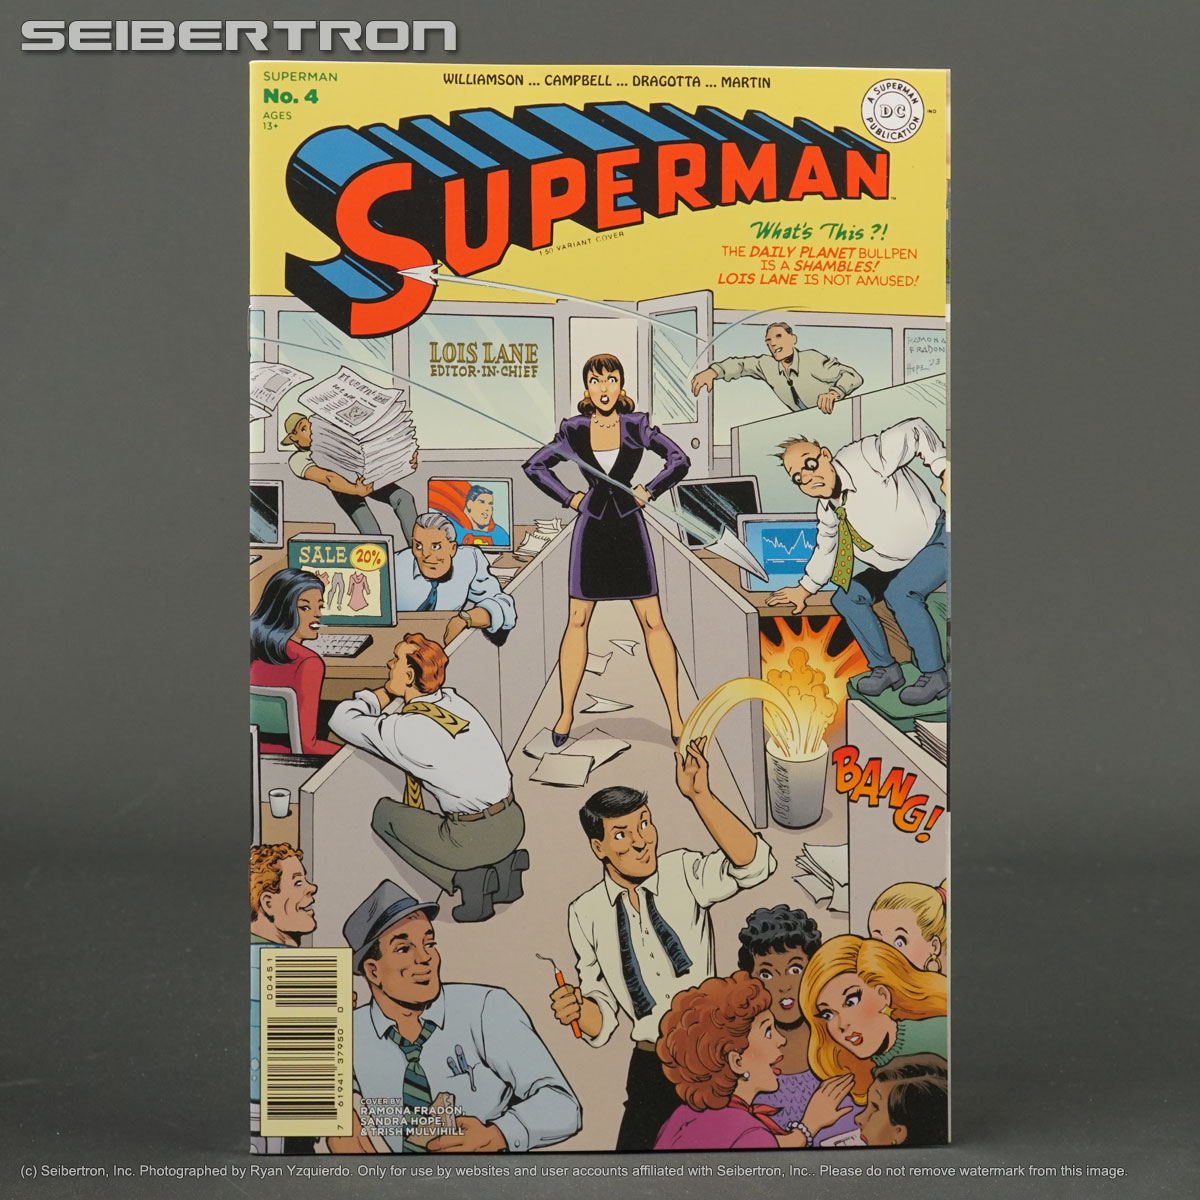 SUPERMAN #4 Cvr F 1:50 DC Comics 0323DC077 4F (W) Williamson (CA) Fradon + Hope